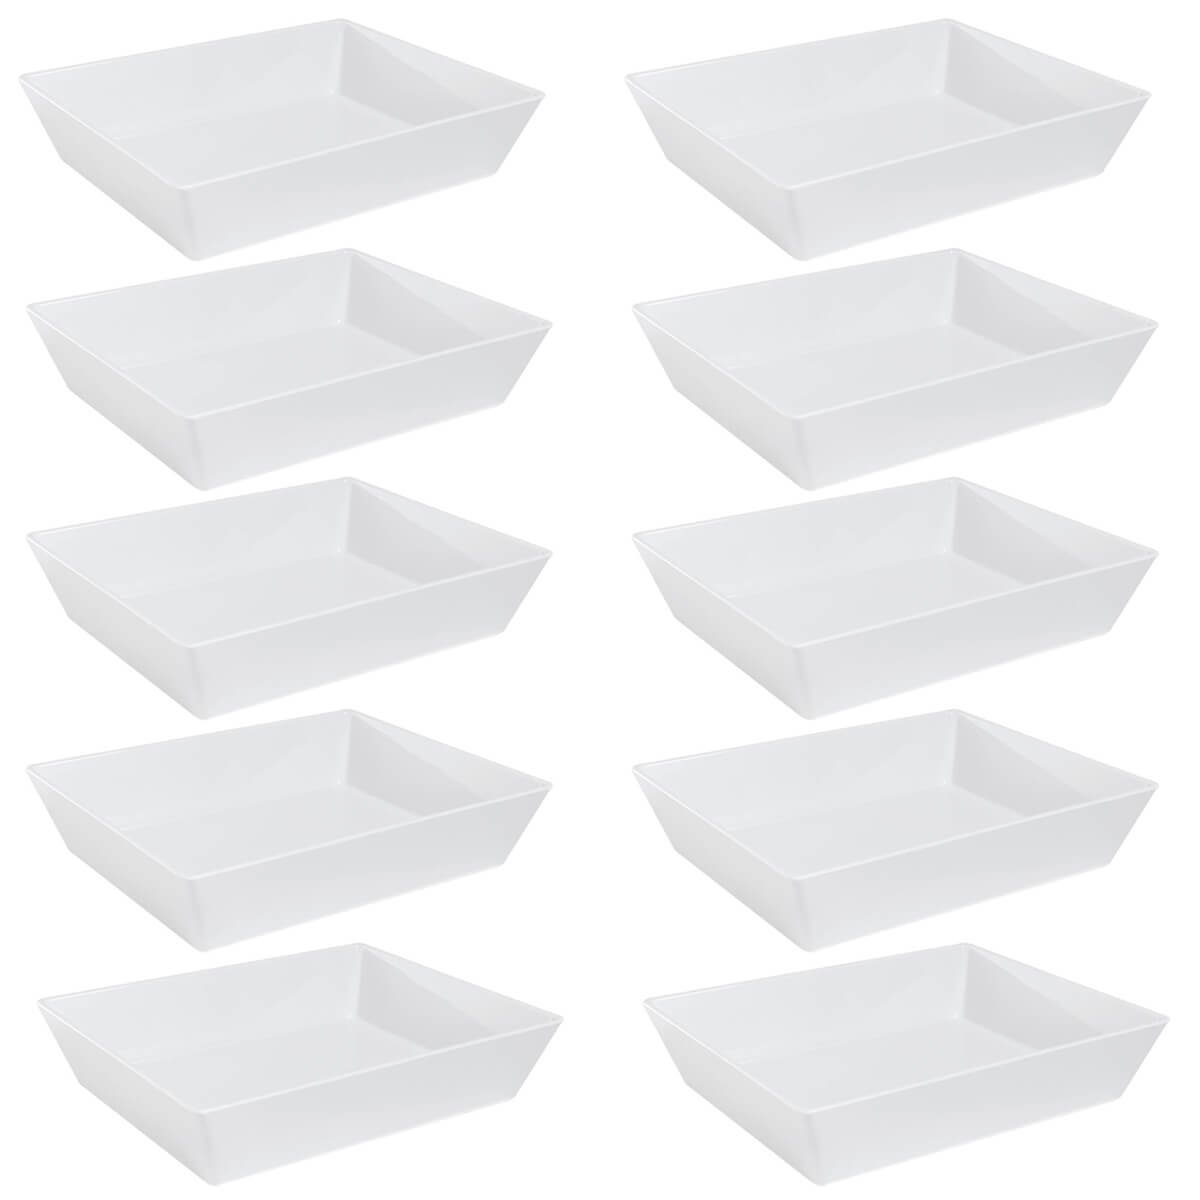 Kit 10 Travessas 4,8l Retangulares Brancas para Servir a Mesa Bandeja Salada Sobremesa Coza - 1